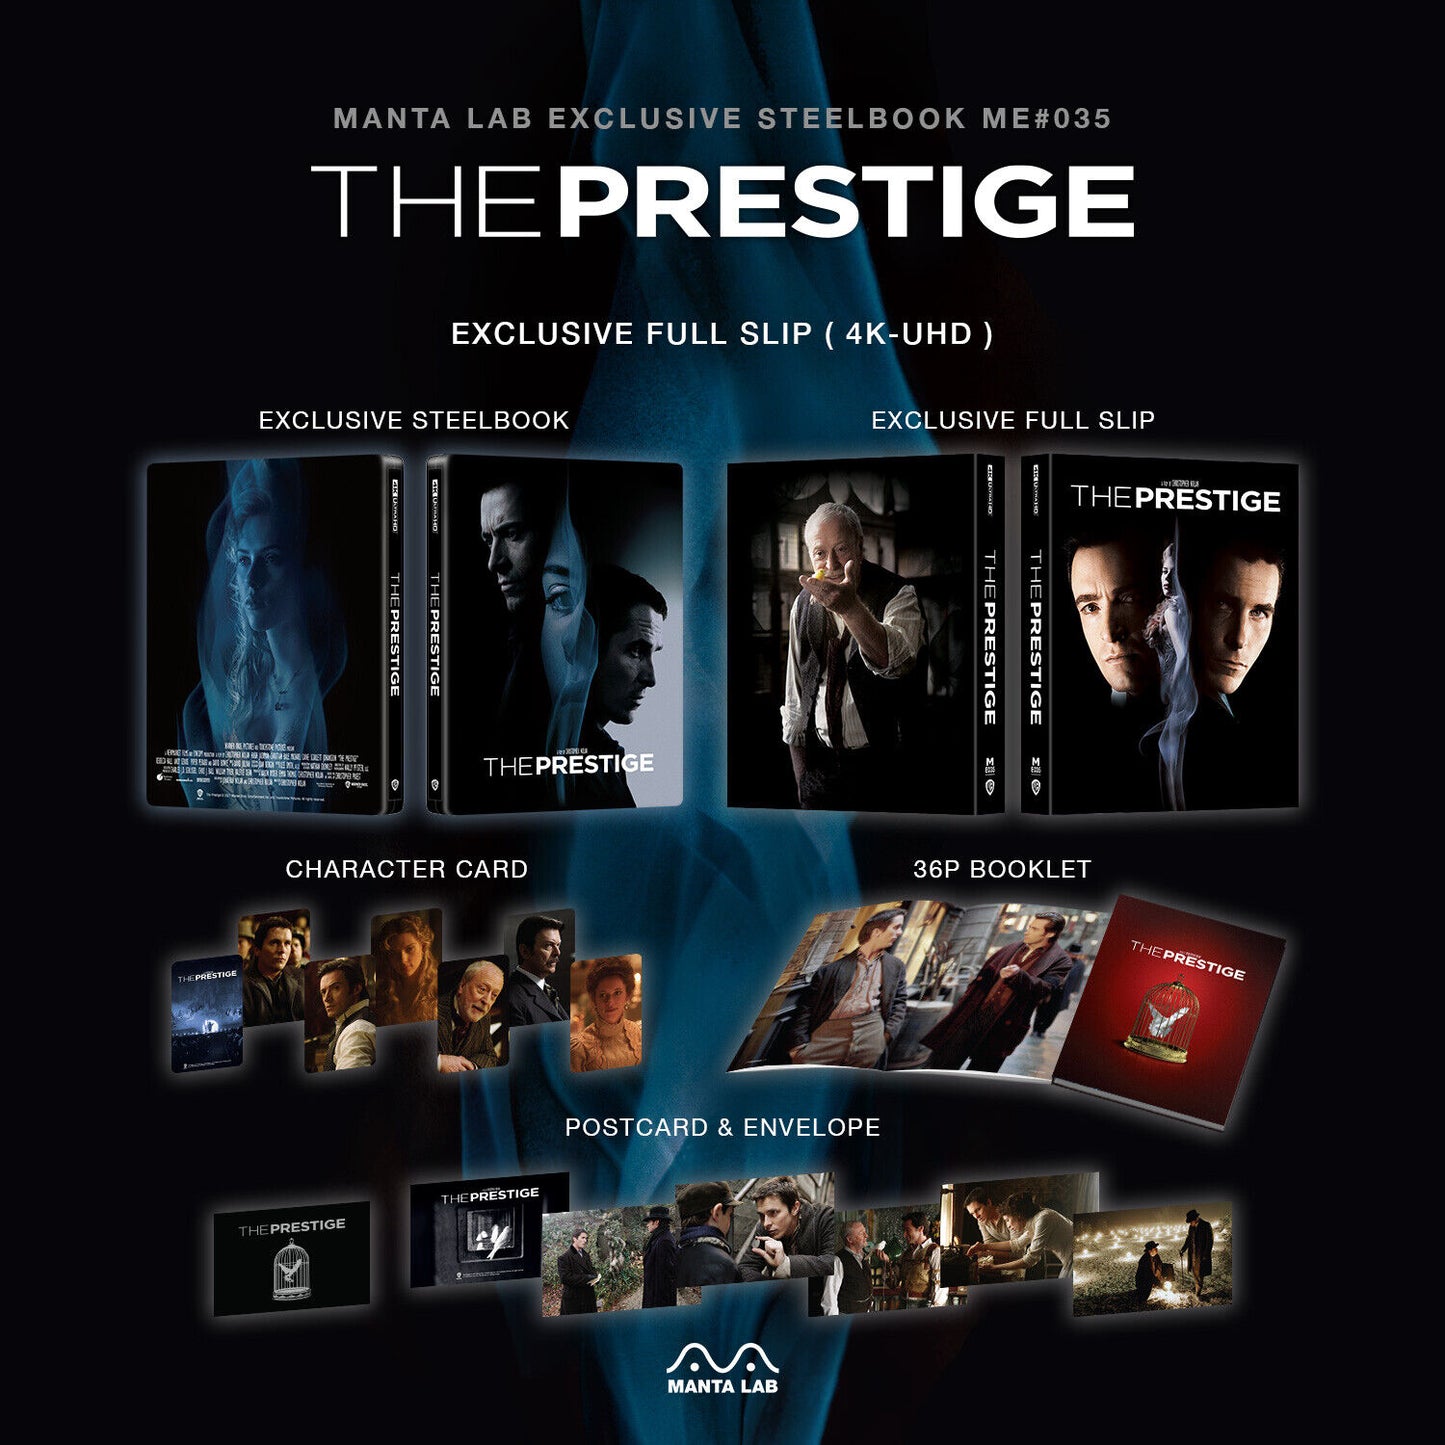 The Prestige 4K Blu-ray Steelbook Manta Lab Exclusive ME#35 One Click Box Set